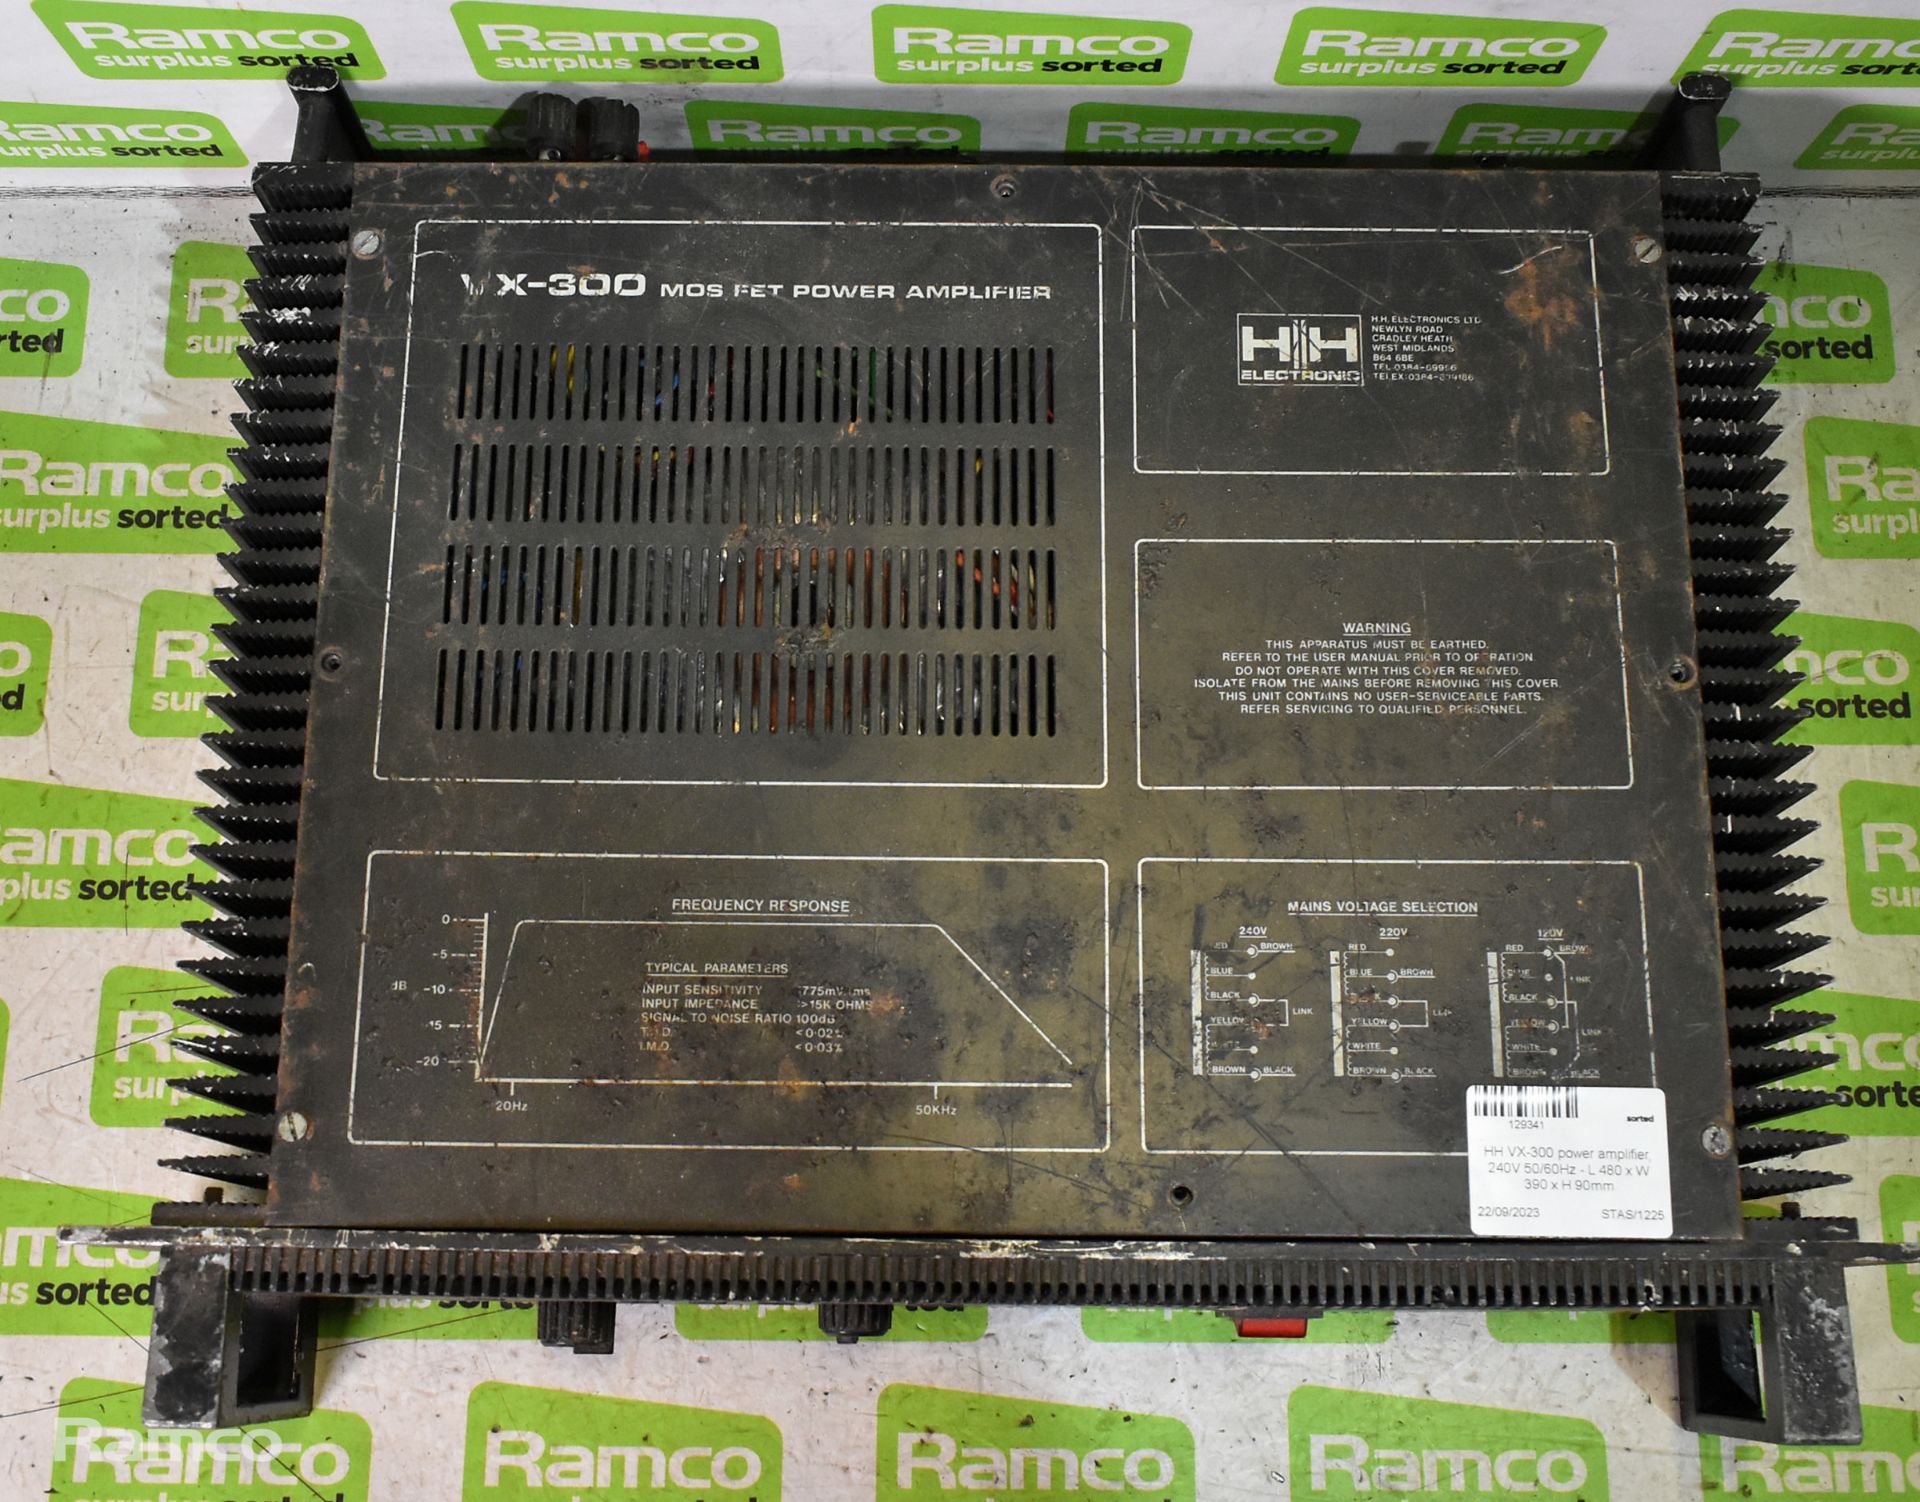 Kenwood DMF-3020 minidisc player, 230V 50Hz - L 490 x W 390 x H 90mm, Sony 530 AM/FM stereo tuner - Image 12 of 14